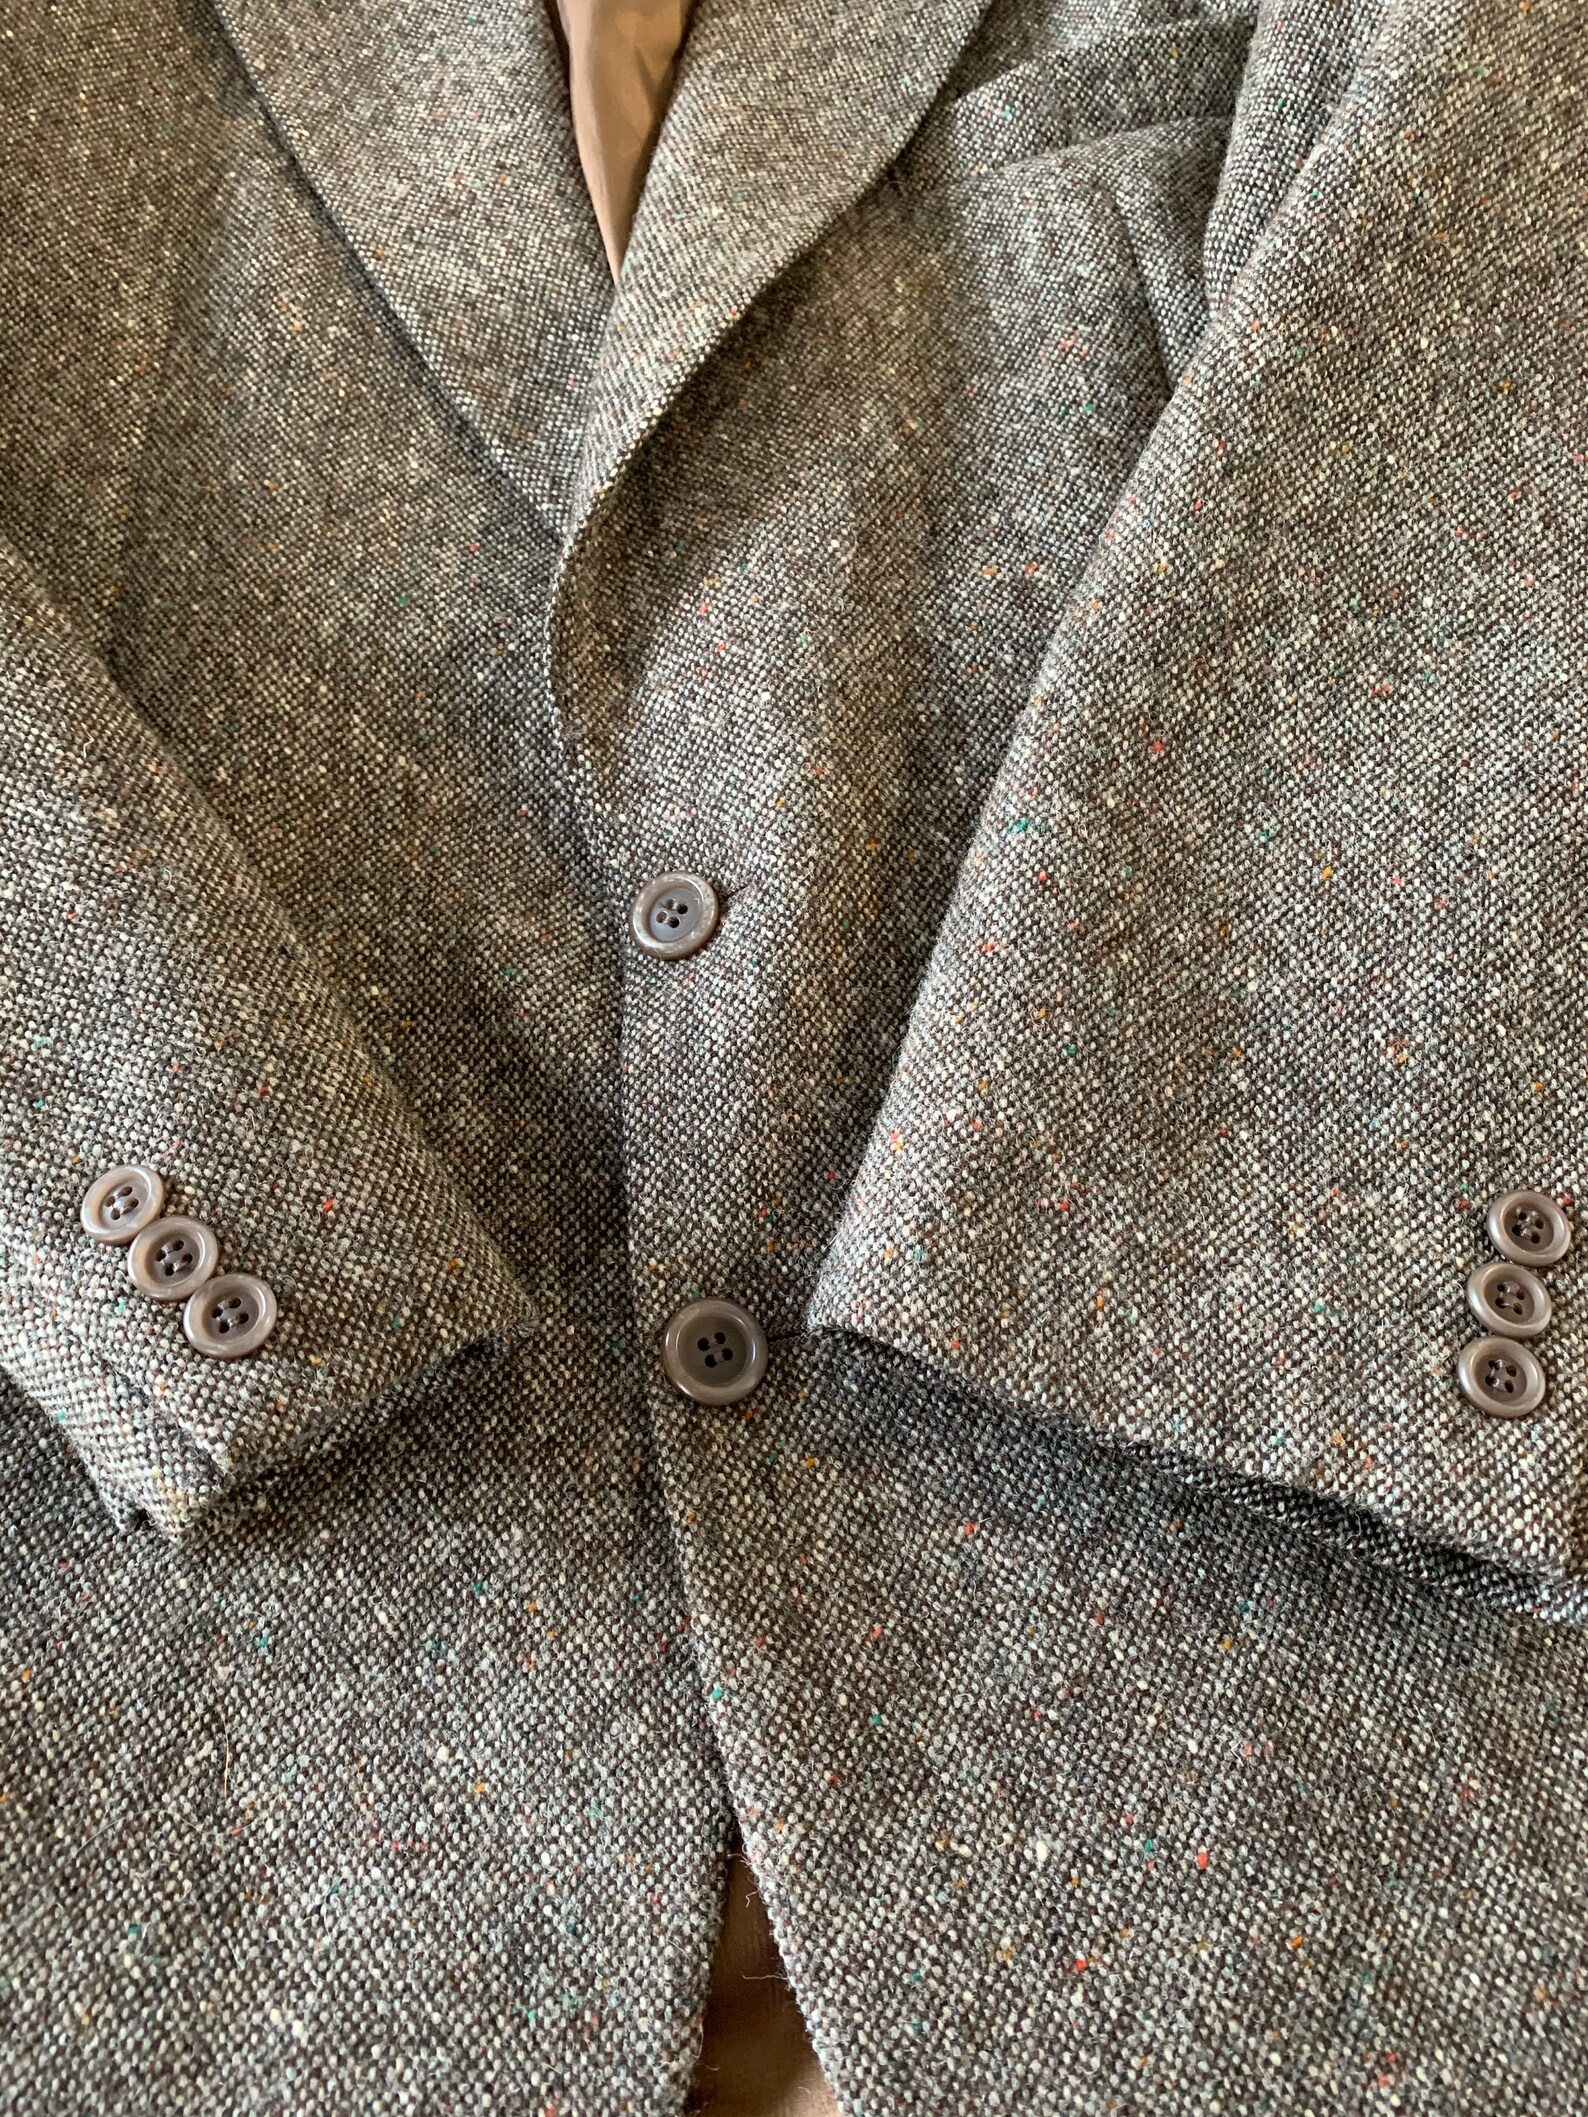 Vintage 1970's Donegal Tweed Jacket sports Coat Blazer - Etsy